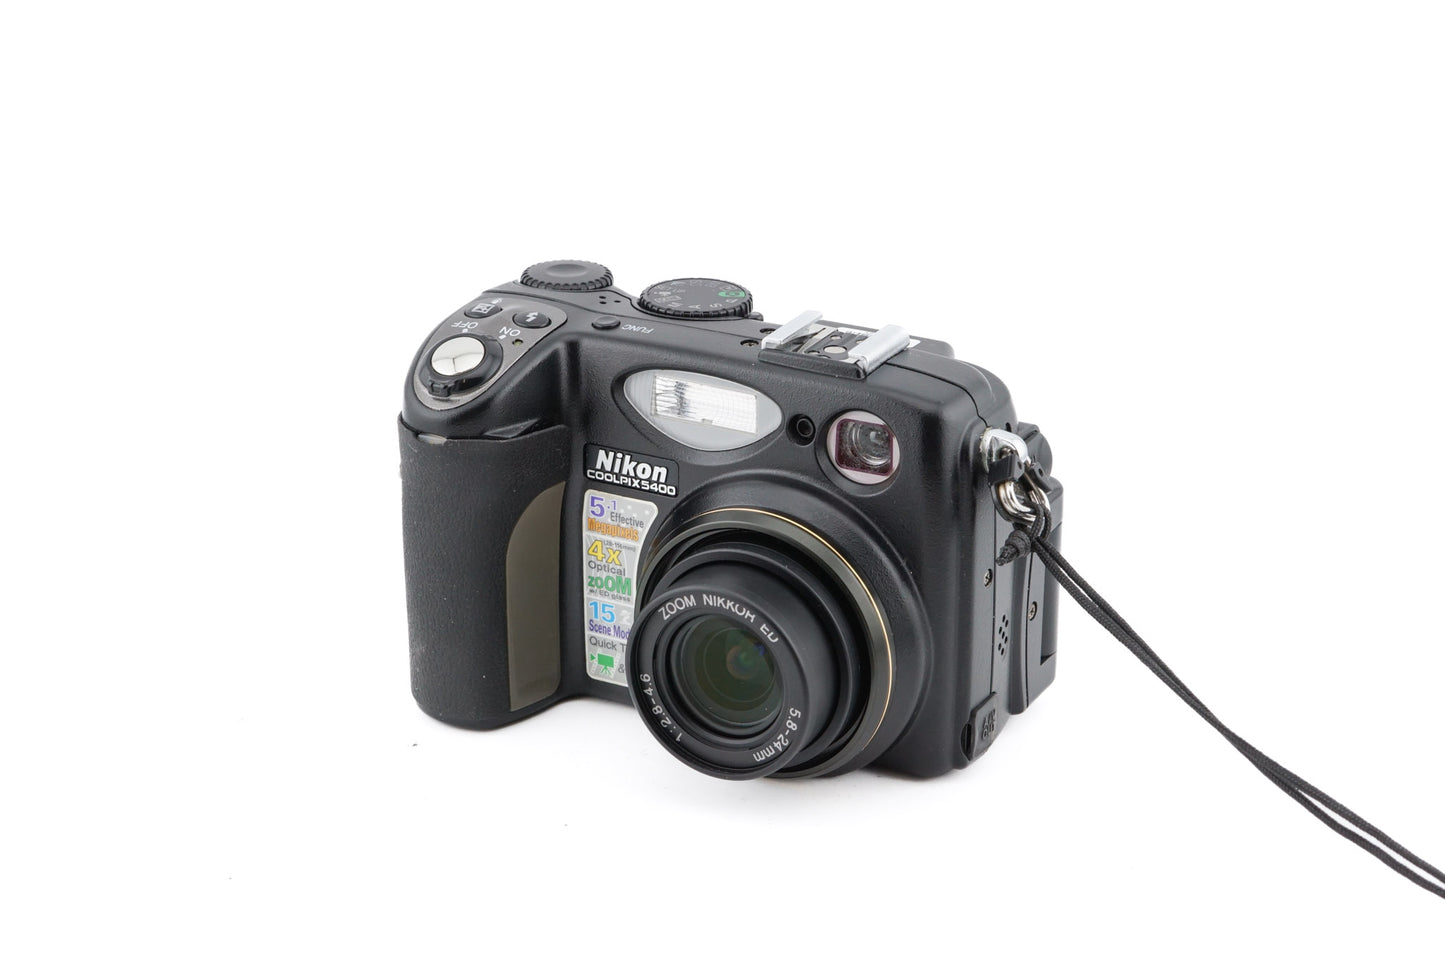 Nikon Coolpix 5400 - Camera